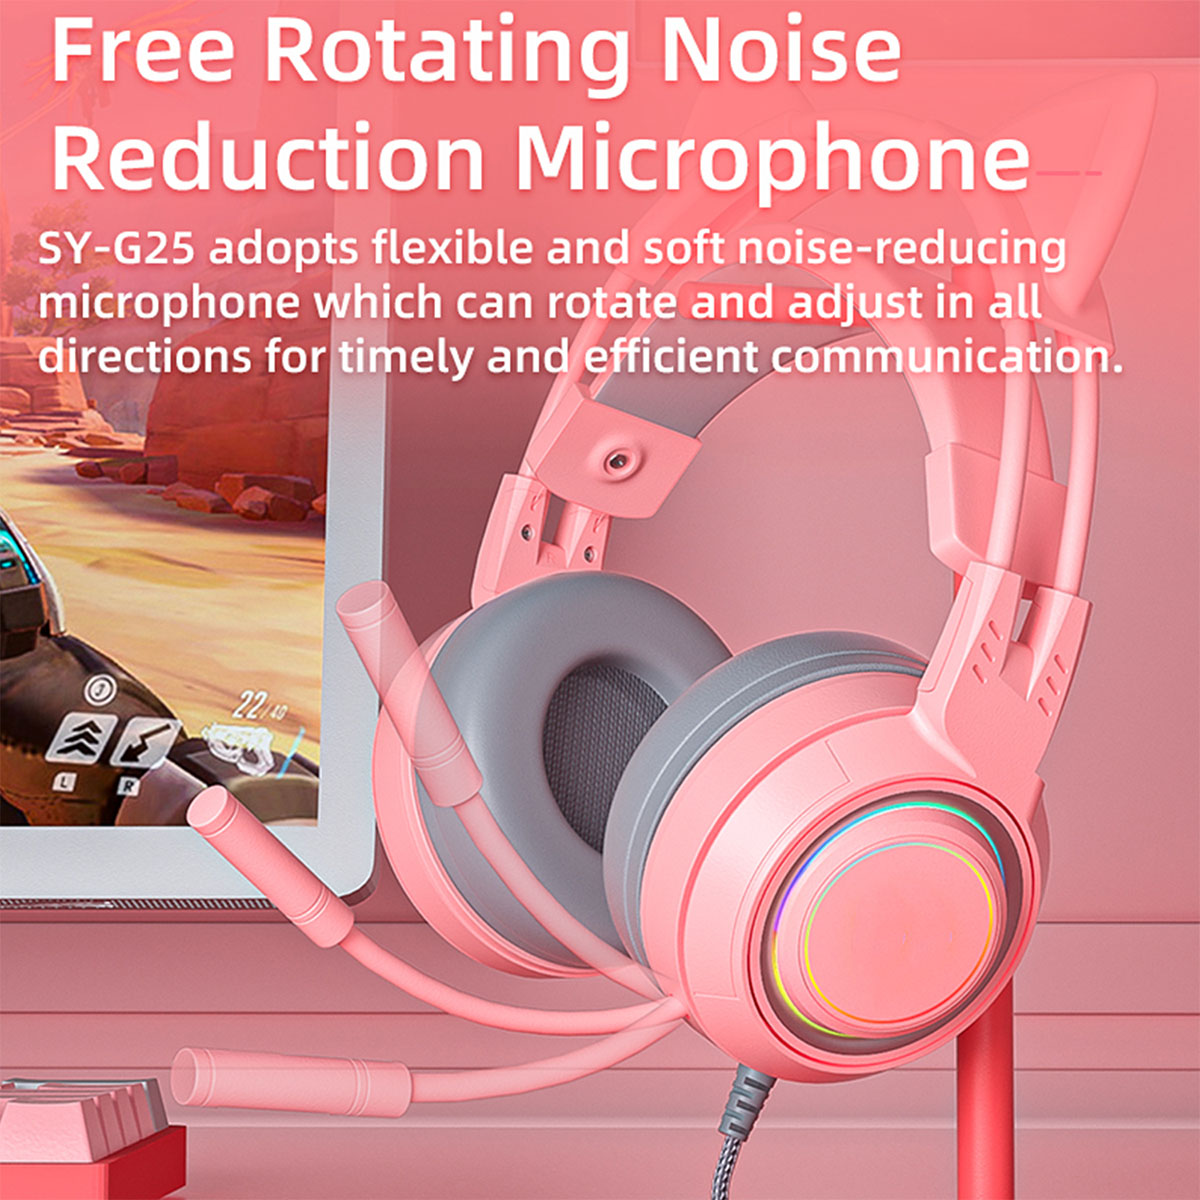 LED-Gaming-Kopfhörer - neuen in Rosa Cat Gaming Erlebe einer Kopfhörer BRIGHTAKE Over-ear Gaming Ear Dimension,